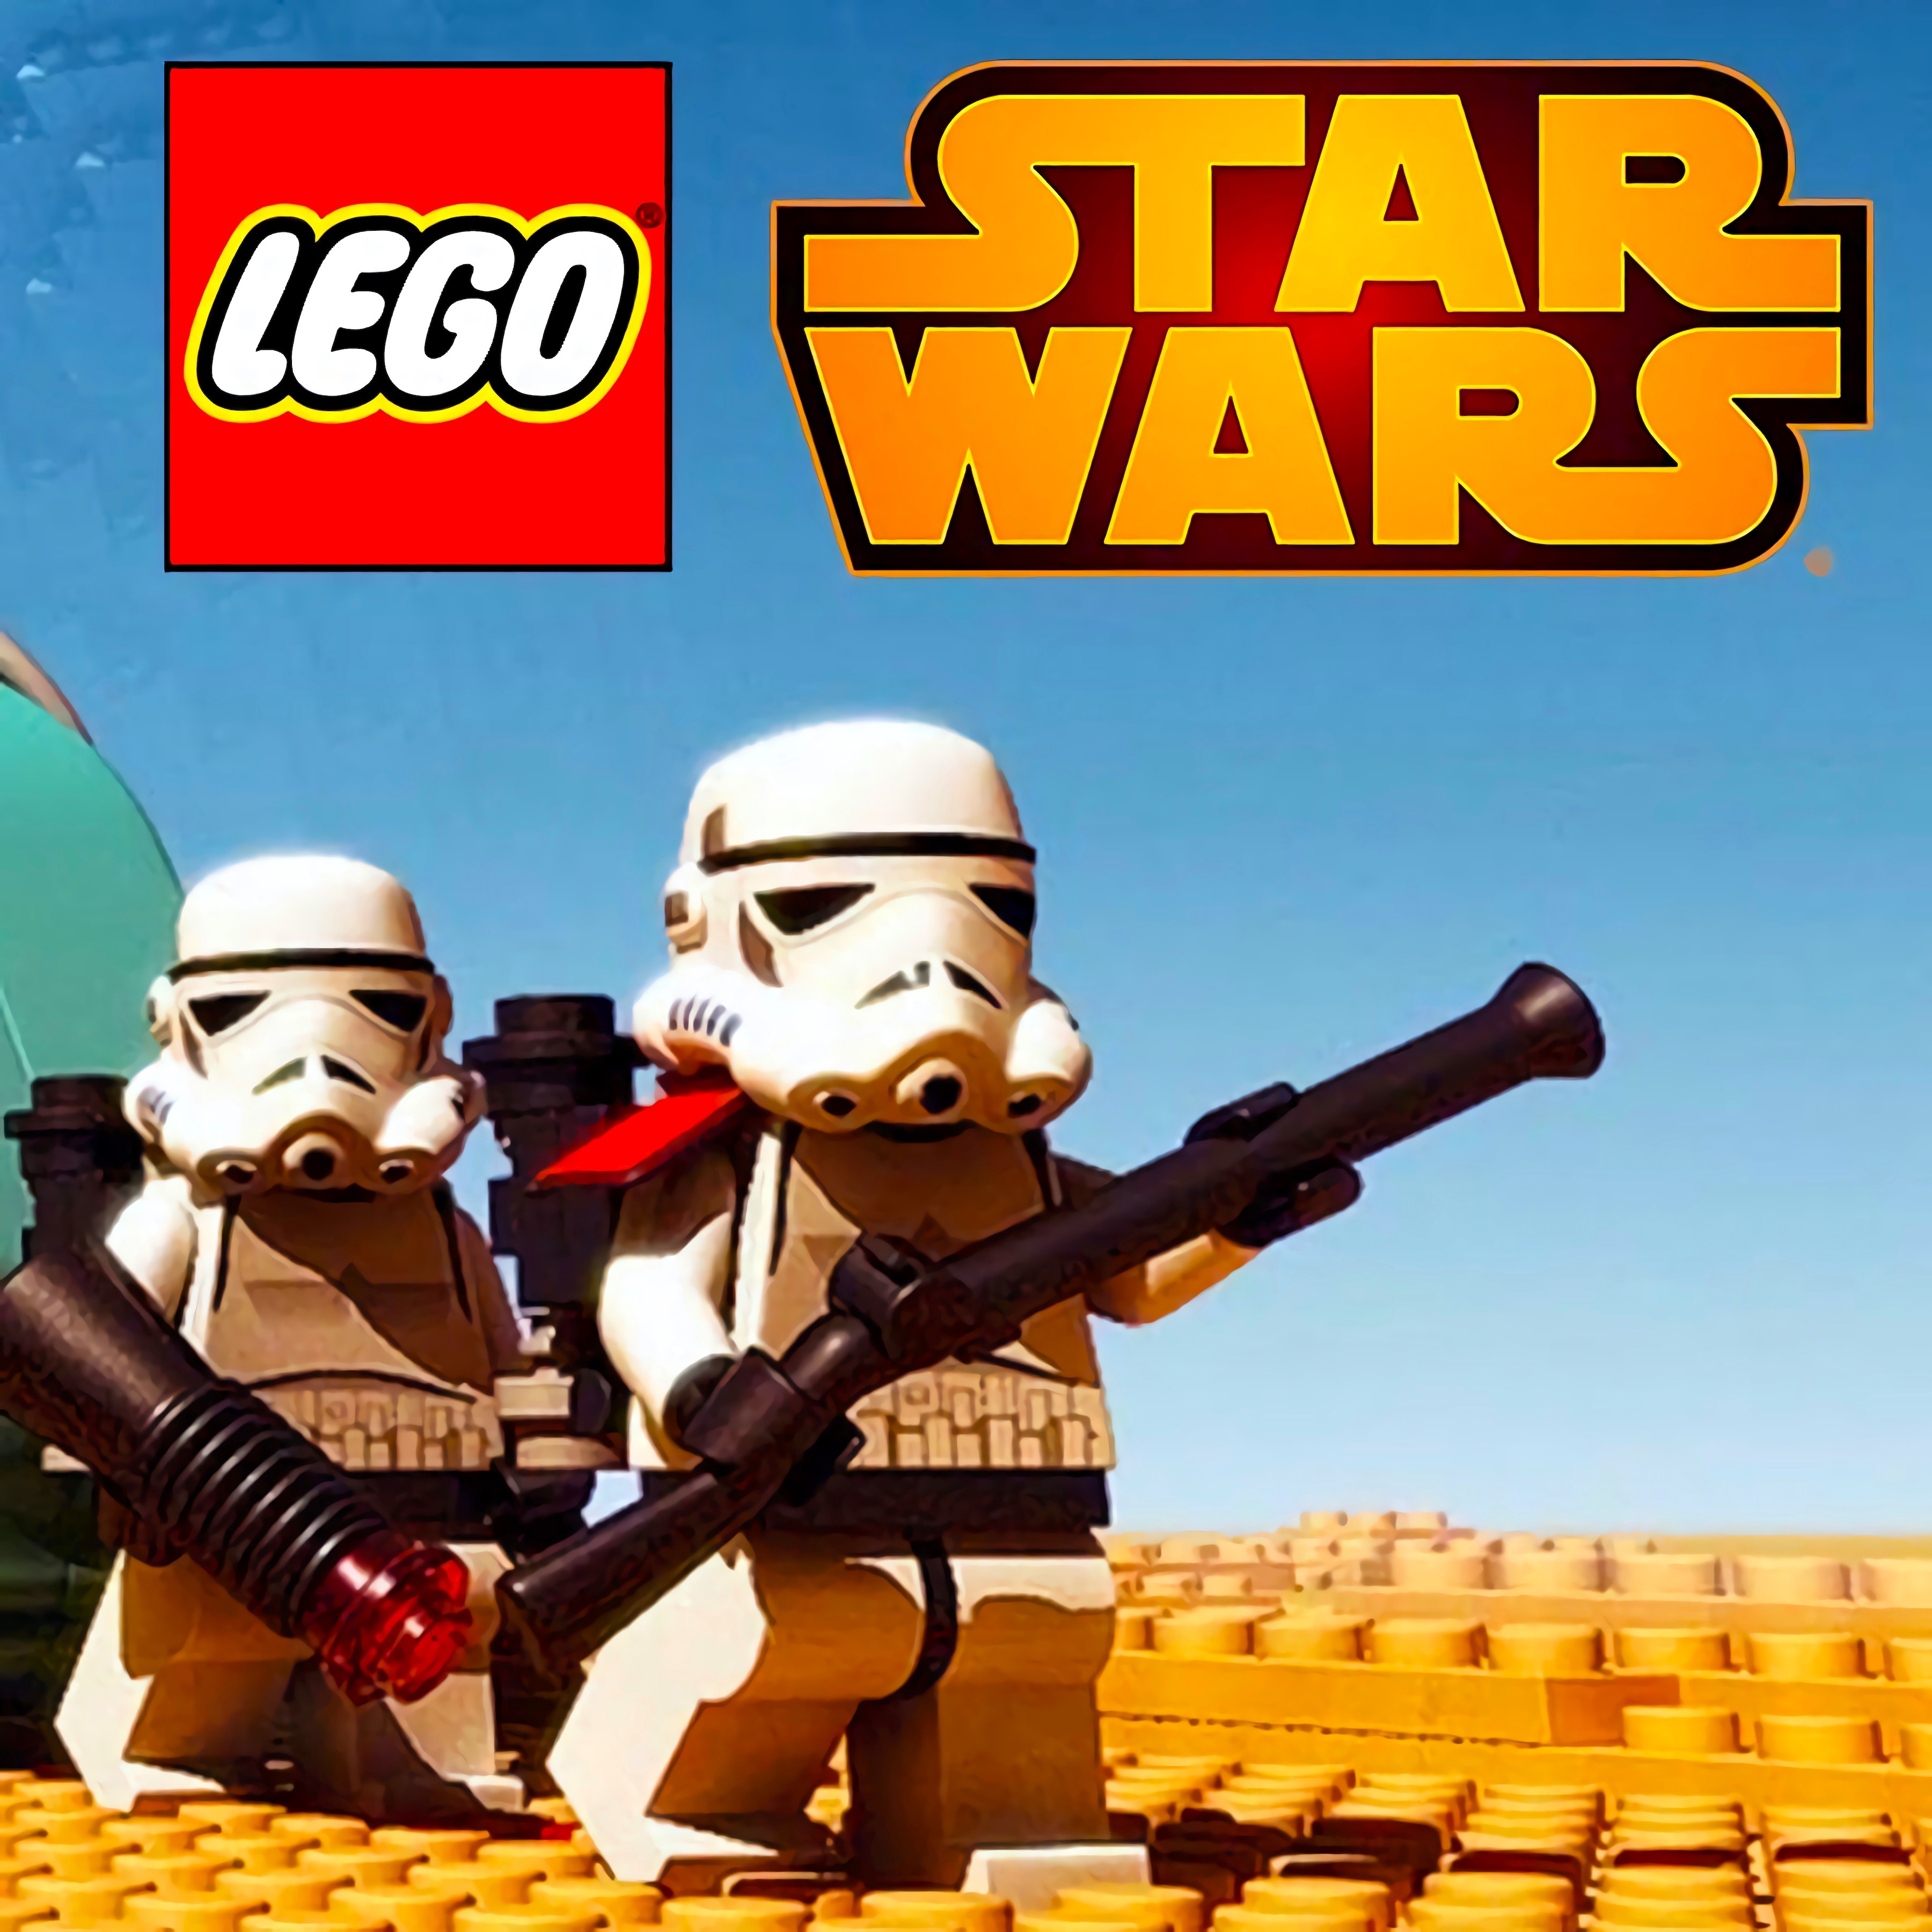 Empire vs Rebels - LEGO Star Wars